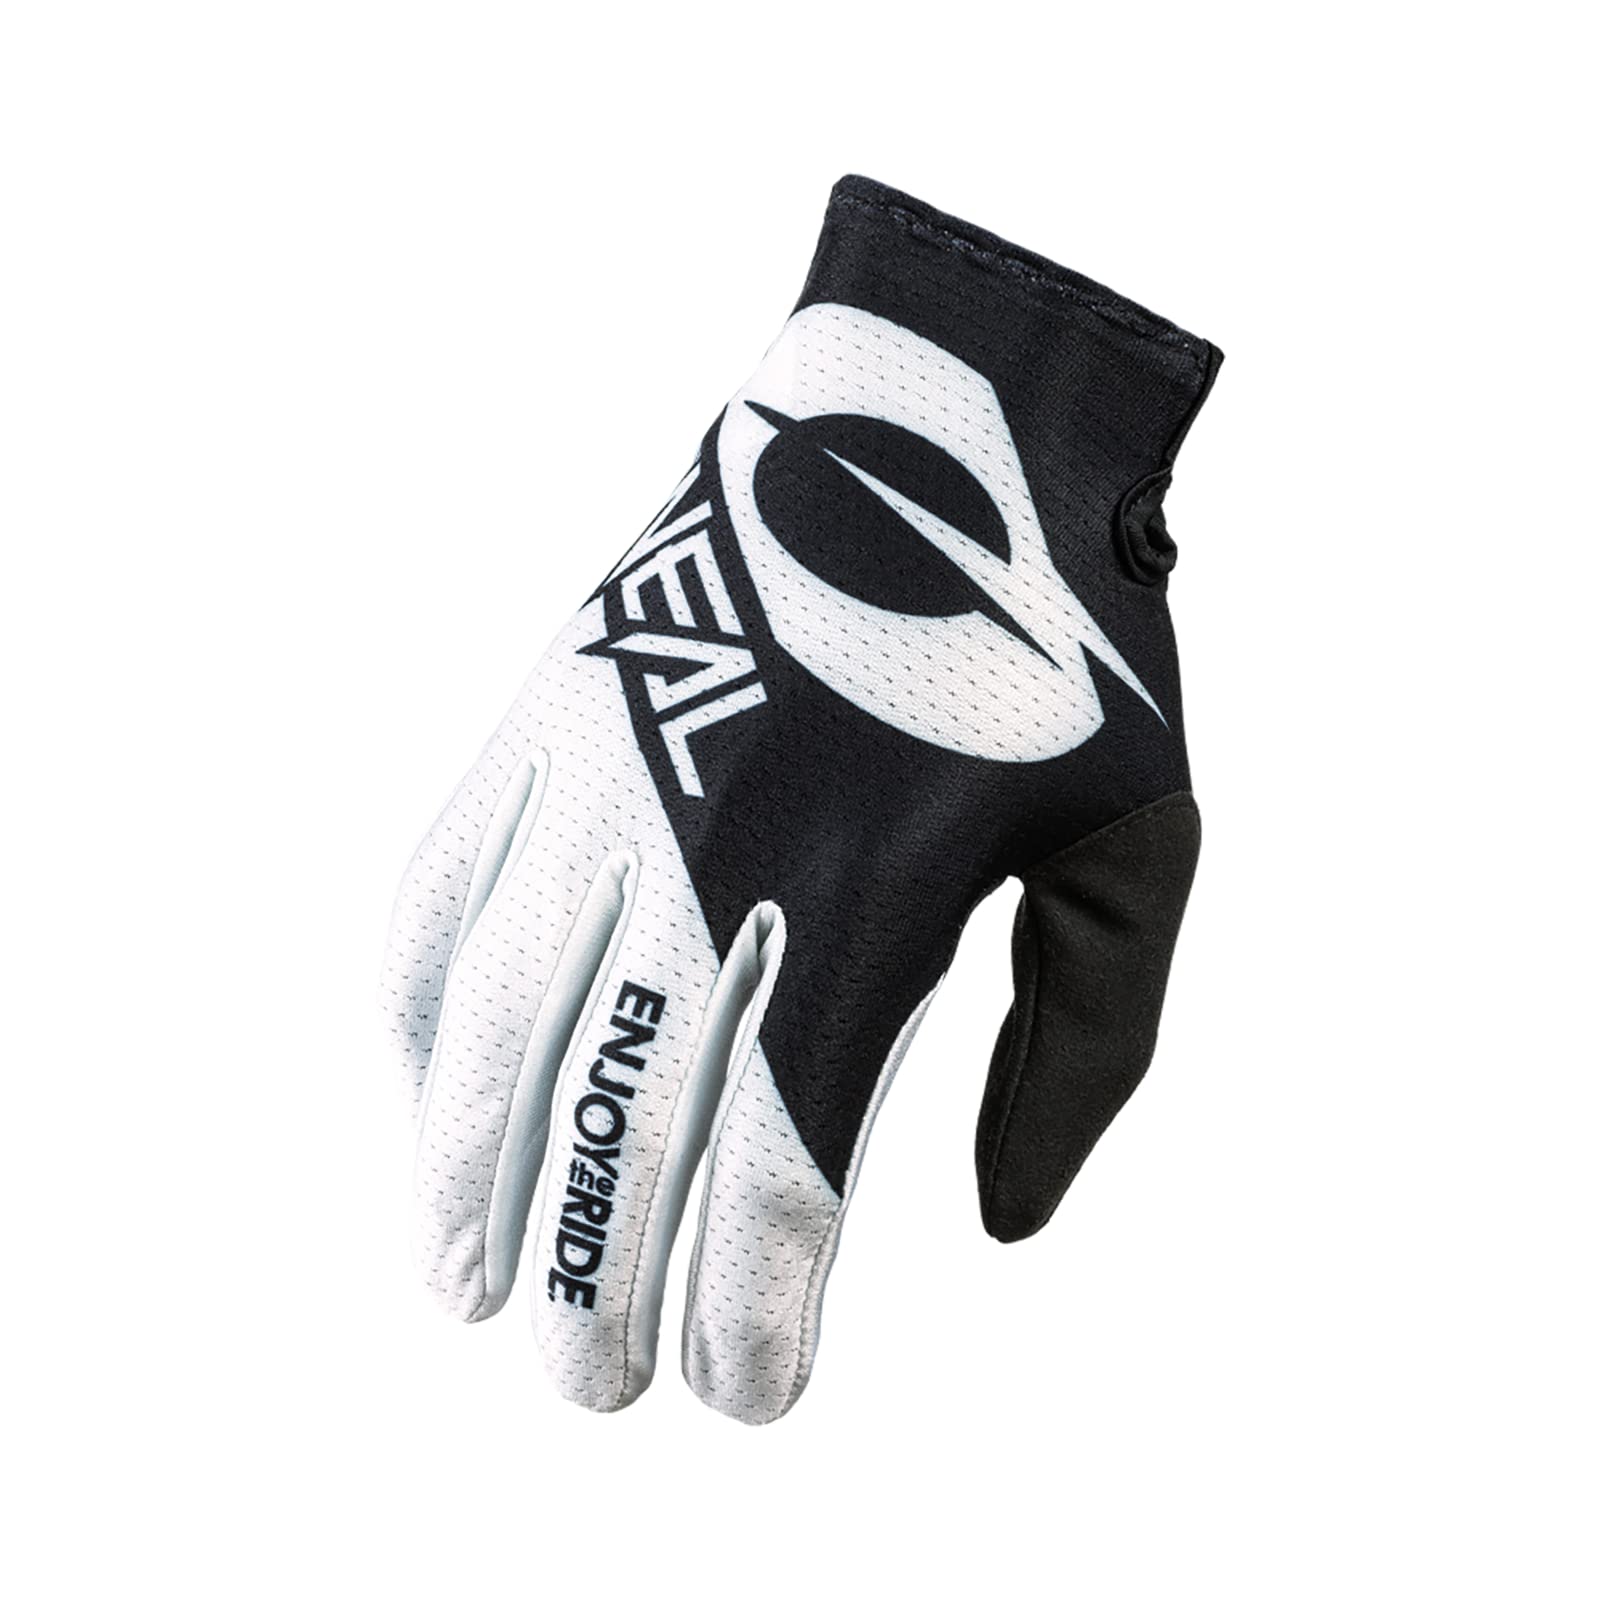 O'NEAL | Fahrrad- & Motocross-Handschuhe | MX MTB DH FR Downhill Freeride | Langlebige, Flexible Materialien, belüftete Handoberseite | Matrix Glove | Erwachsene | Schwarz Weiß | Größe M von O'NEAL